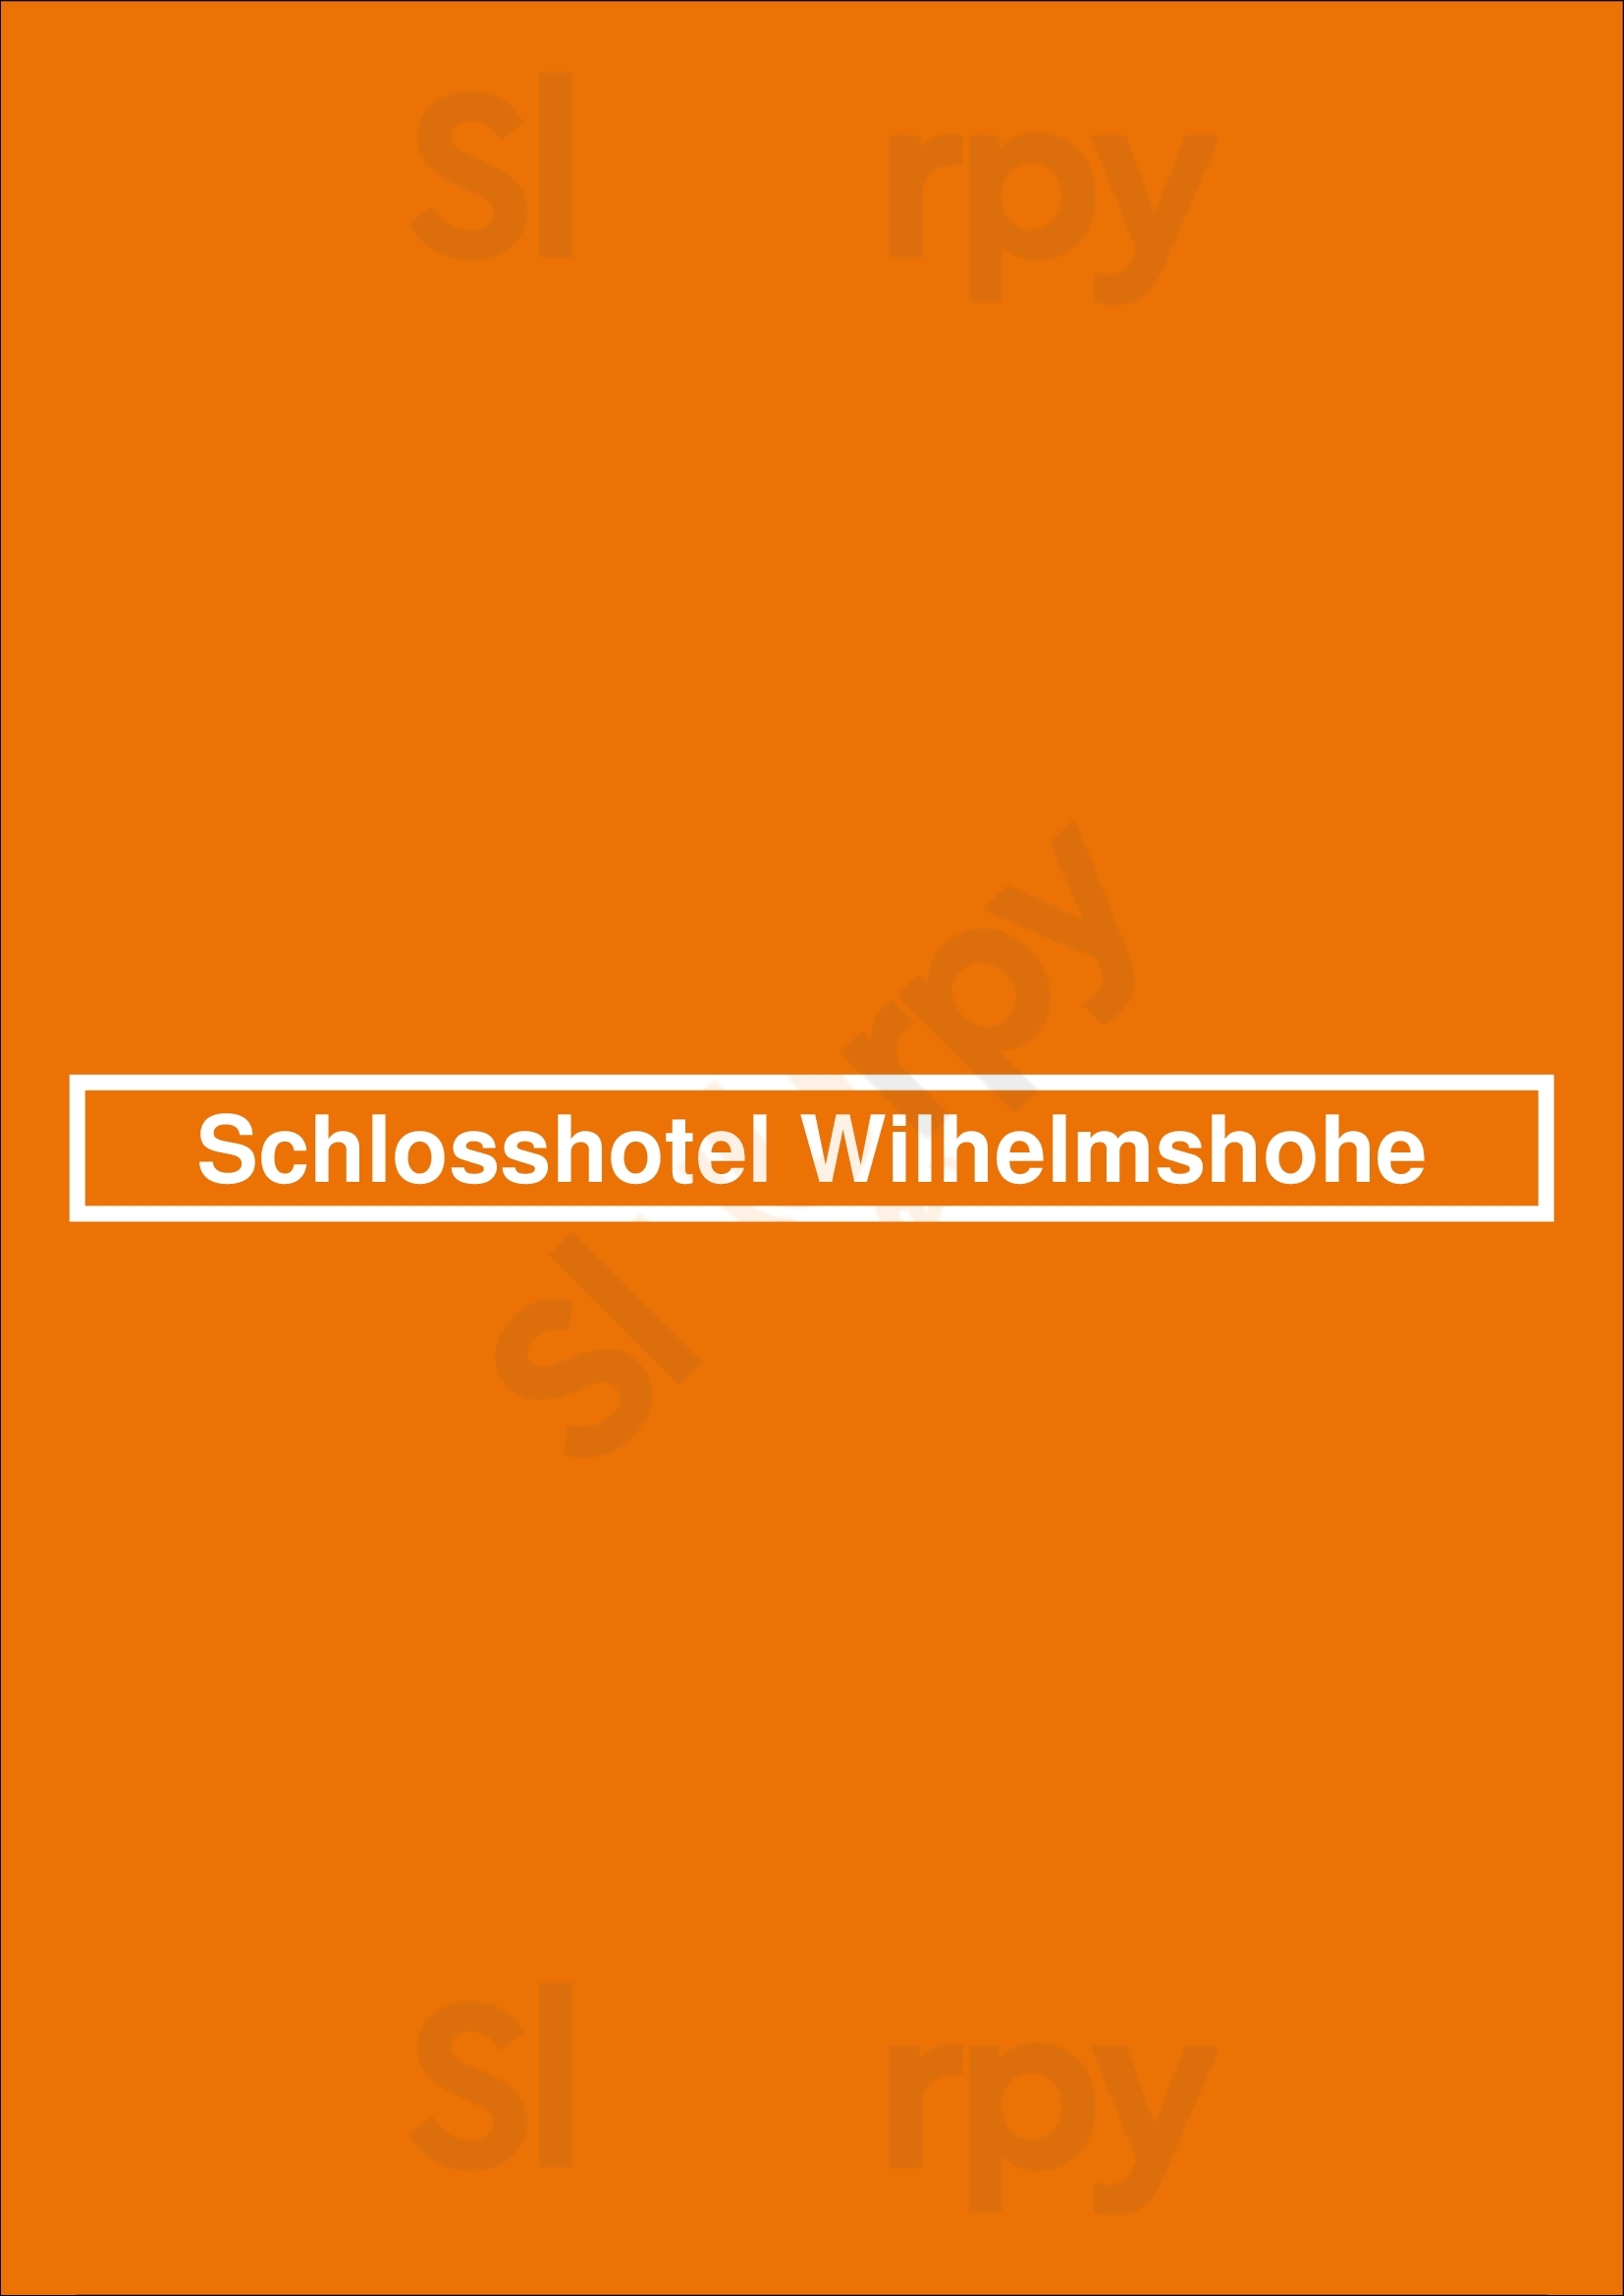 Schlosshotel Wilhelmshohe Kassel Menu - 1